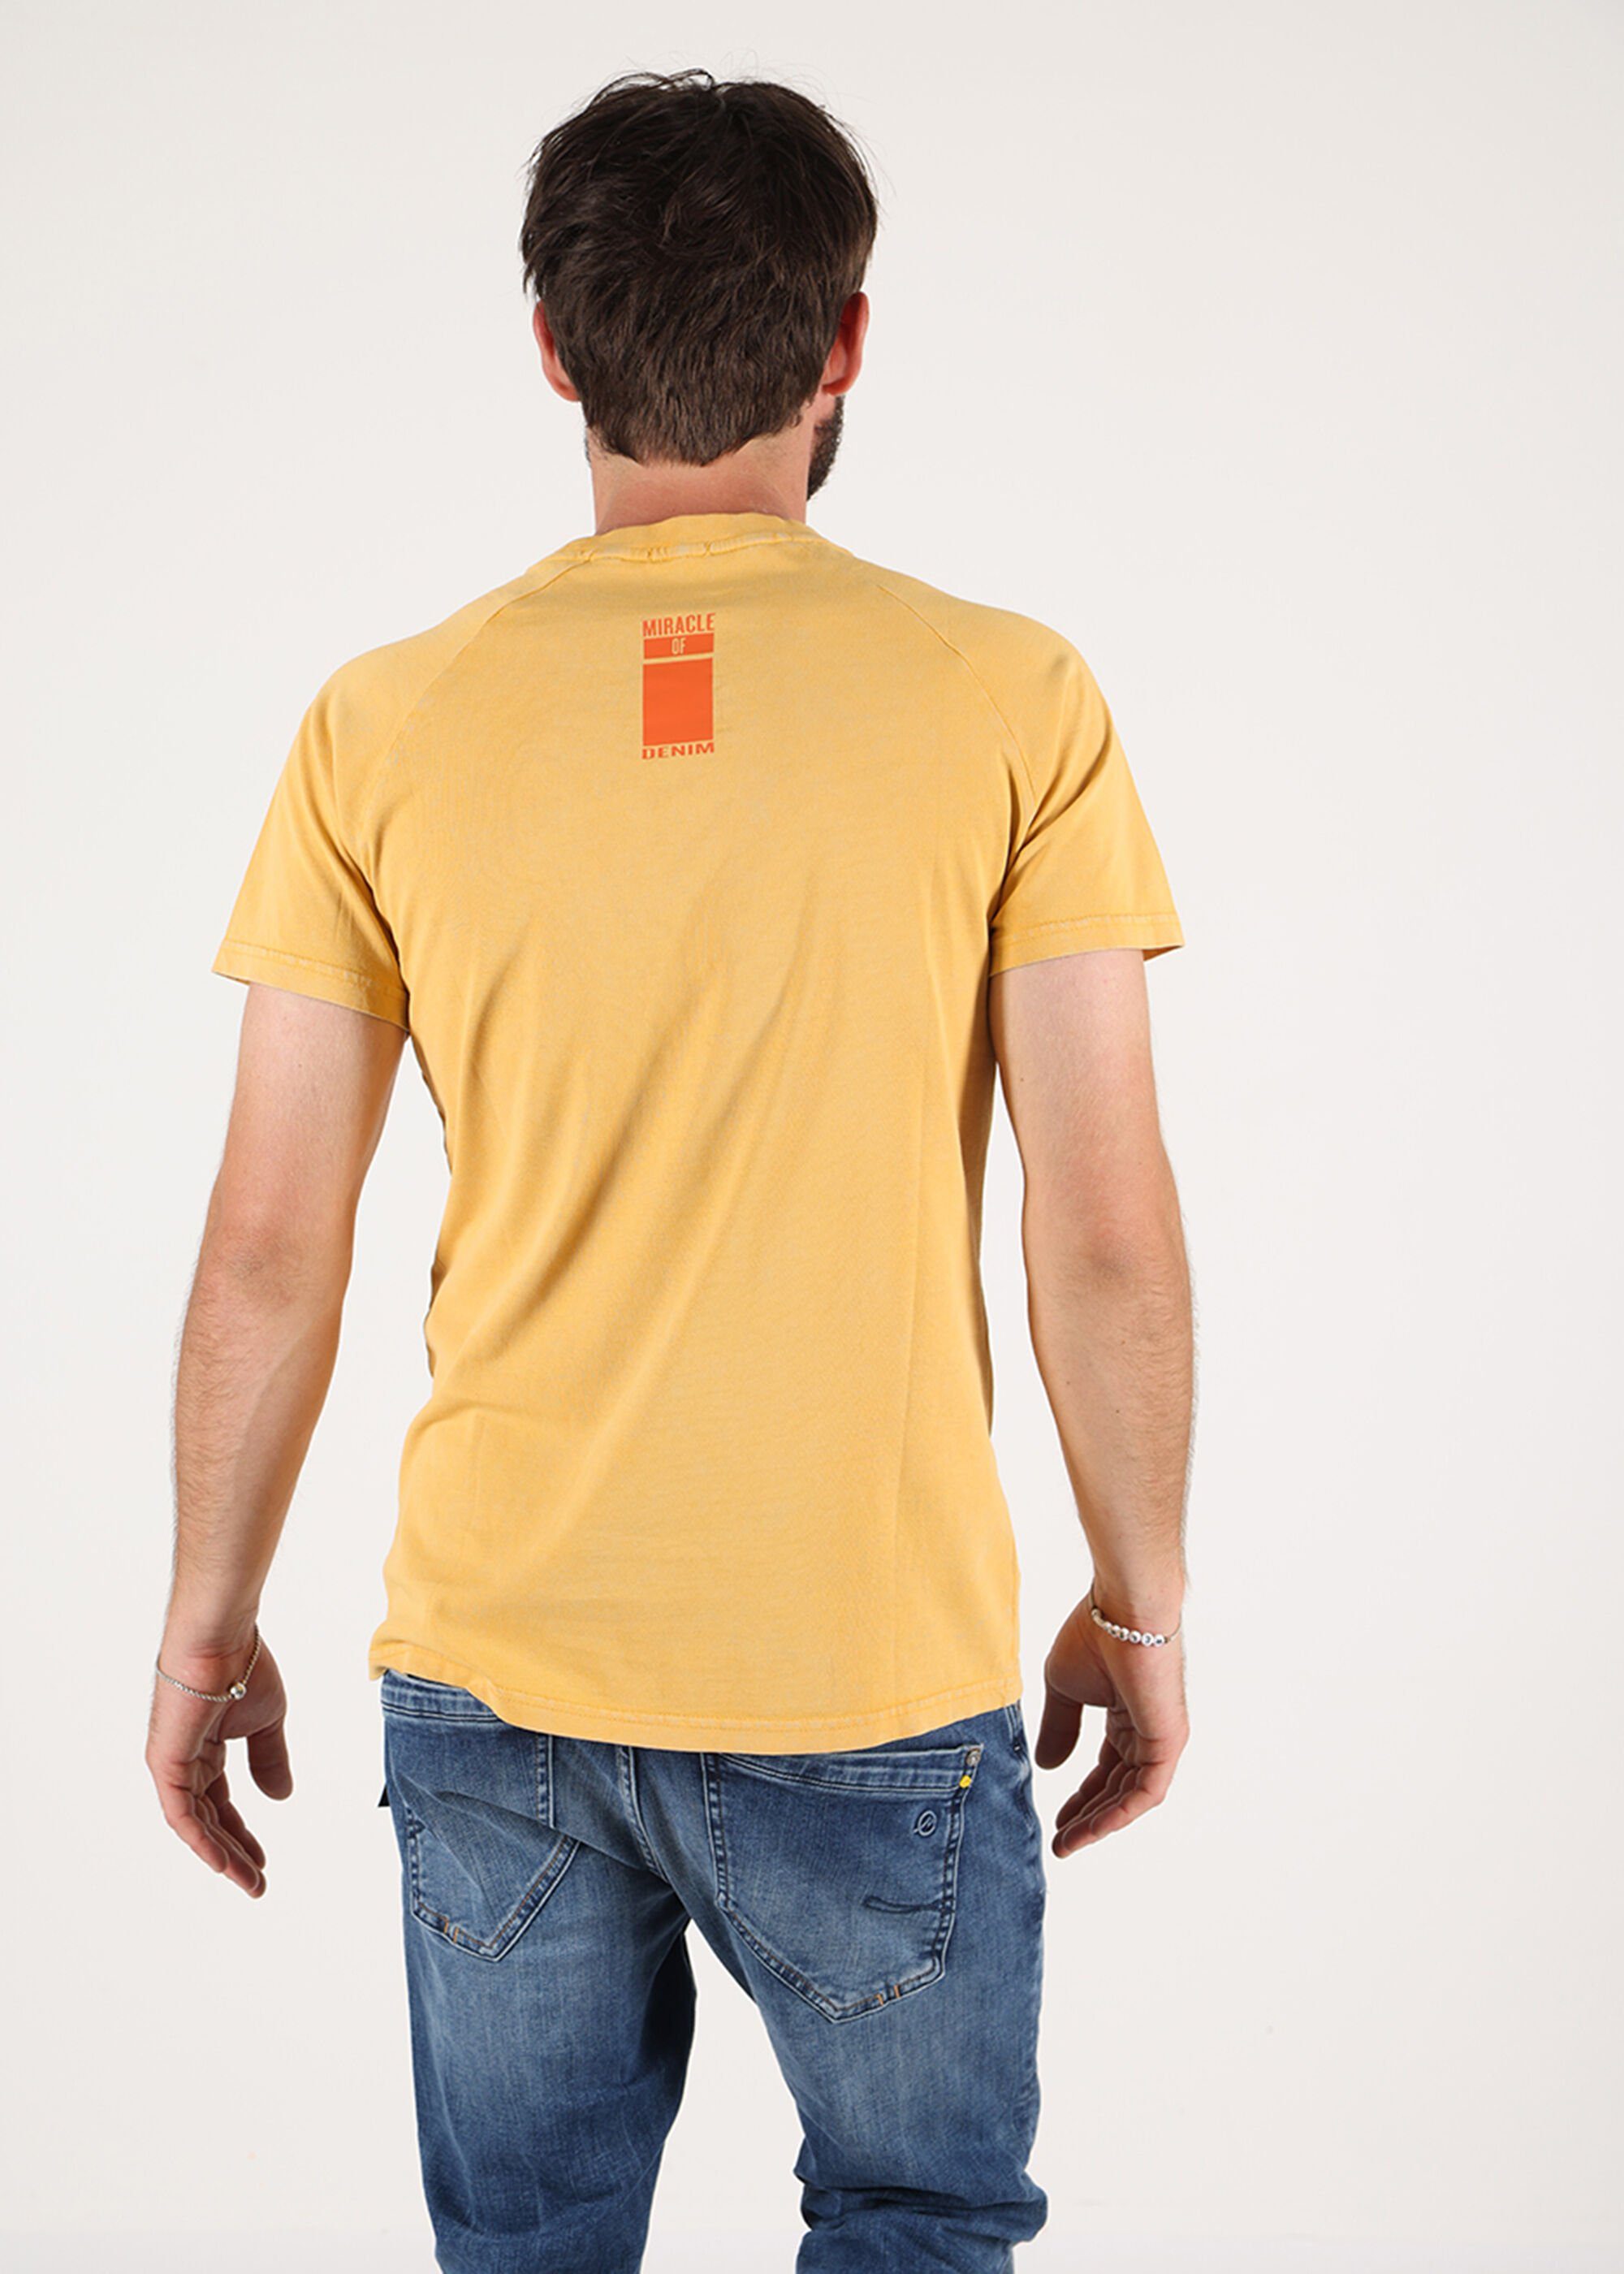 Design Denim Banana of Yellow T-Shirt unifarbenen im Miracle